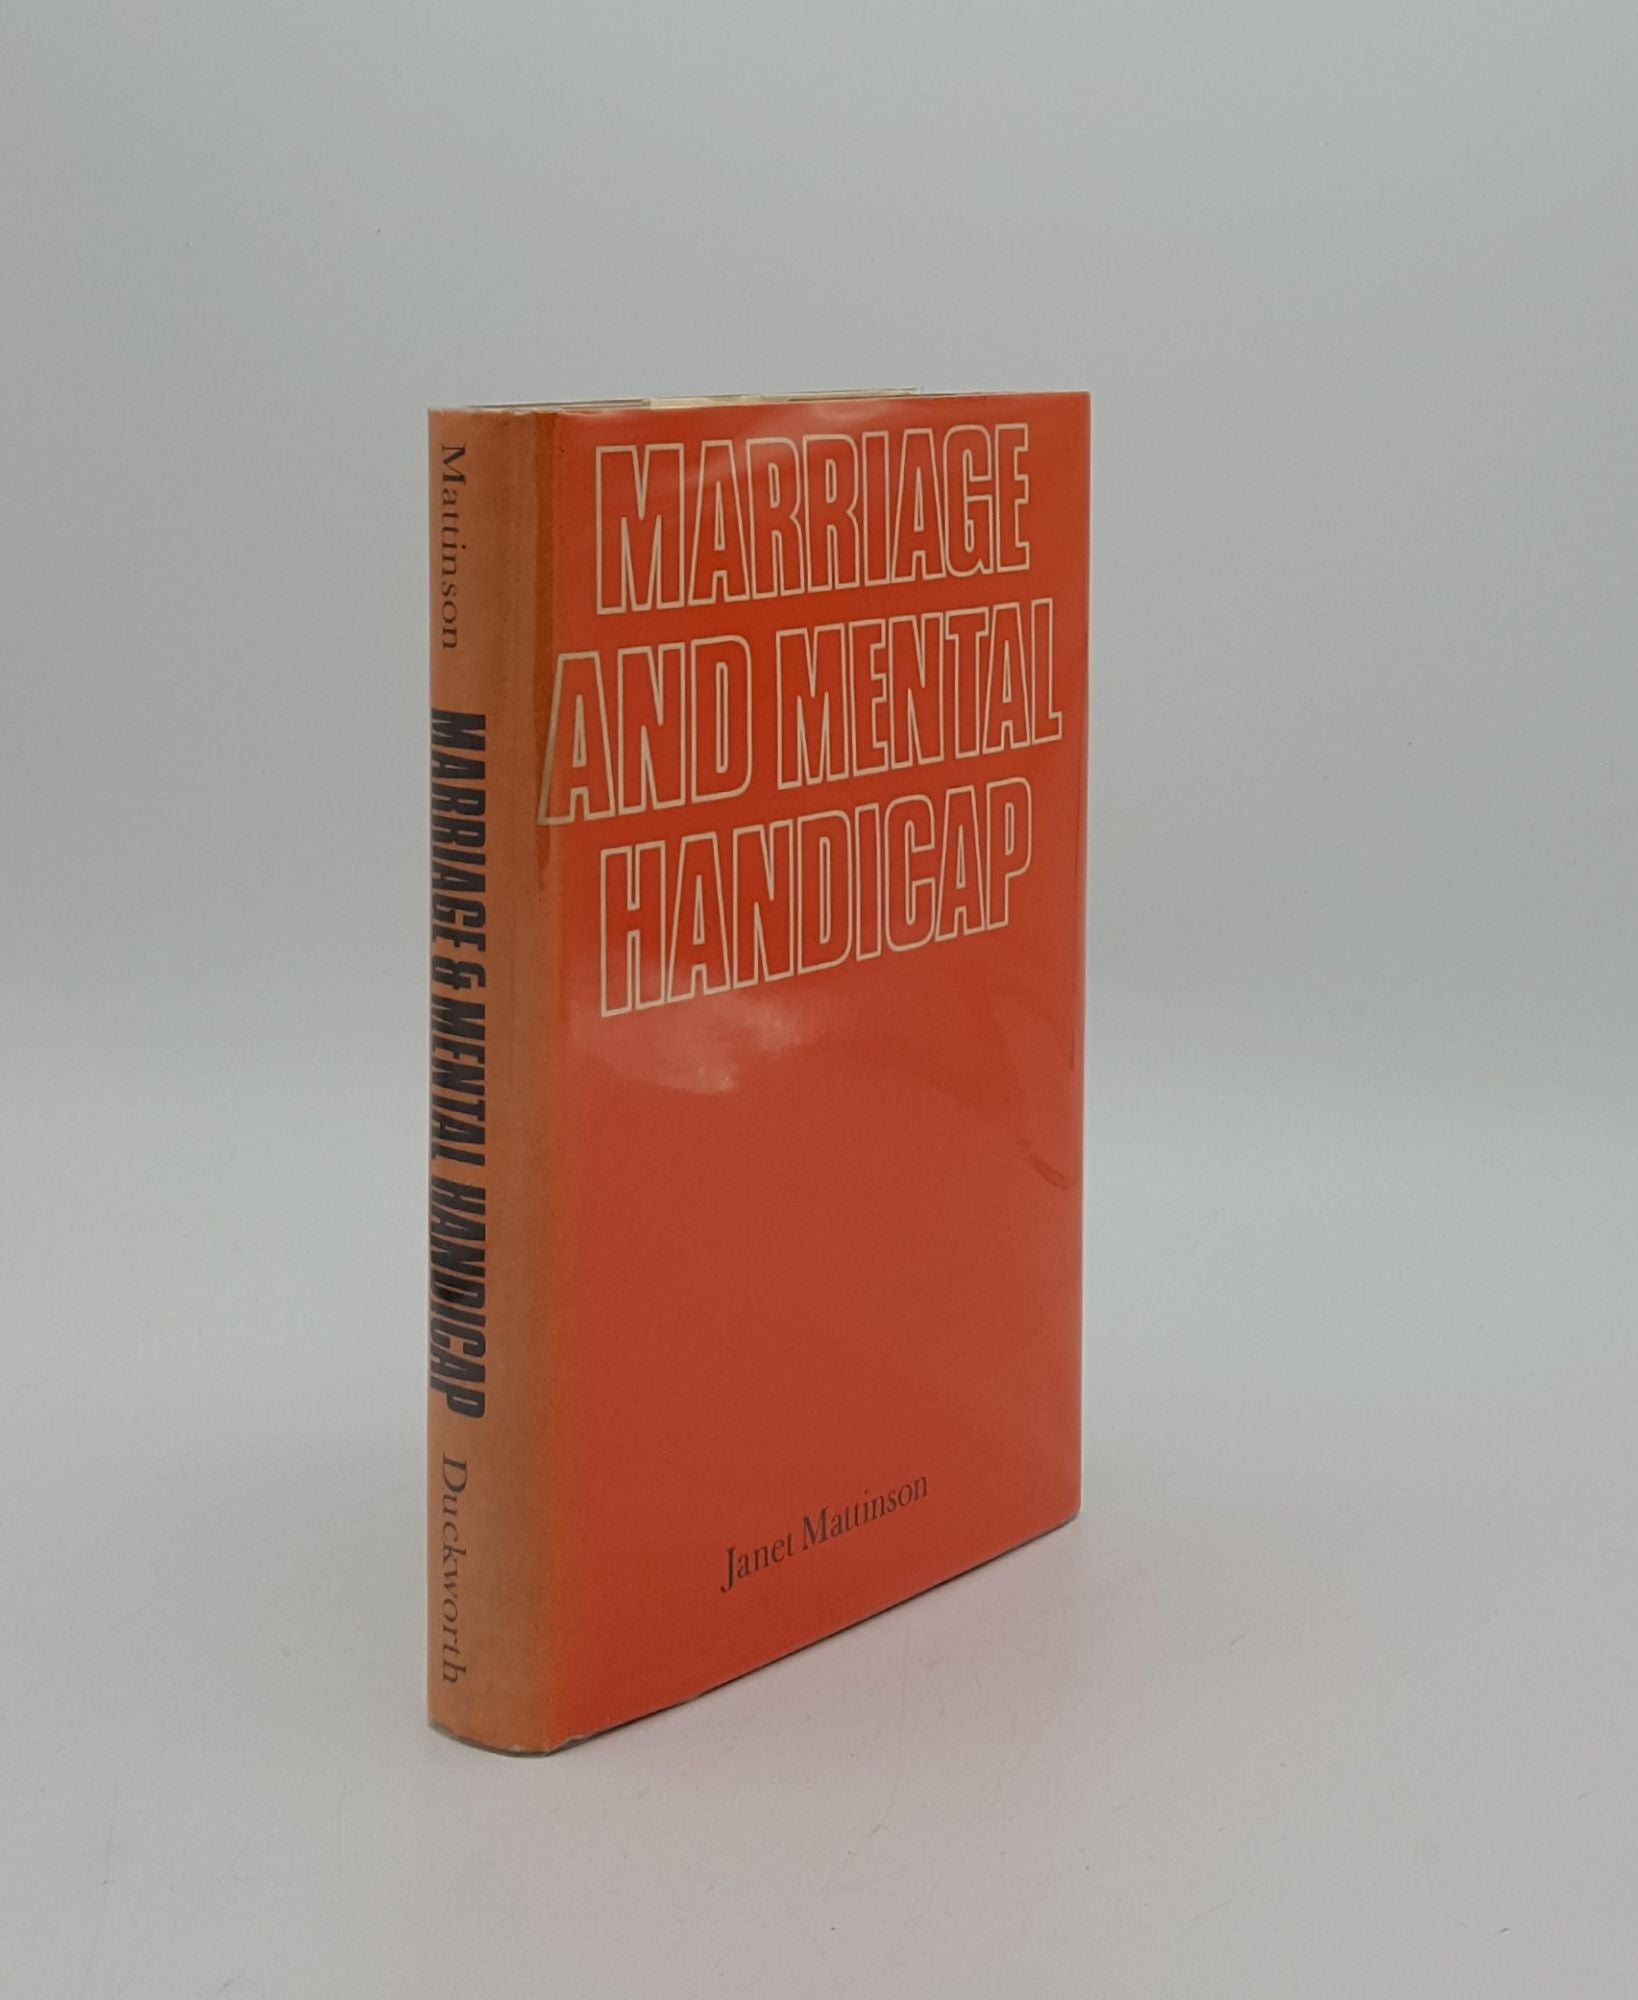 MATTINSON Janet - Marriage and Mental Handicap